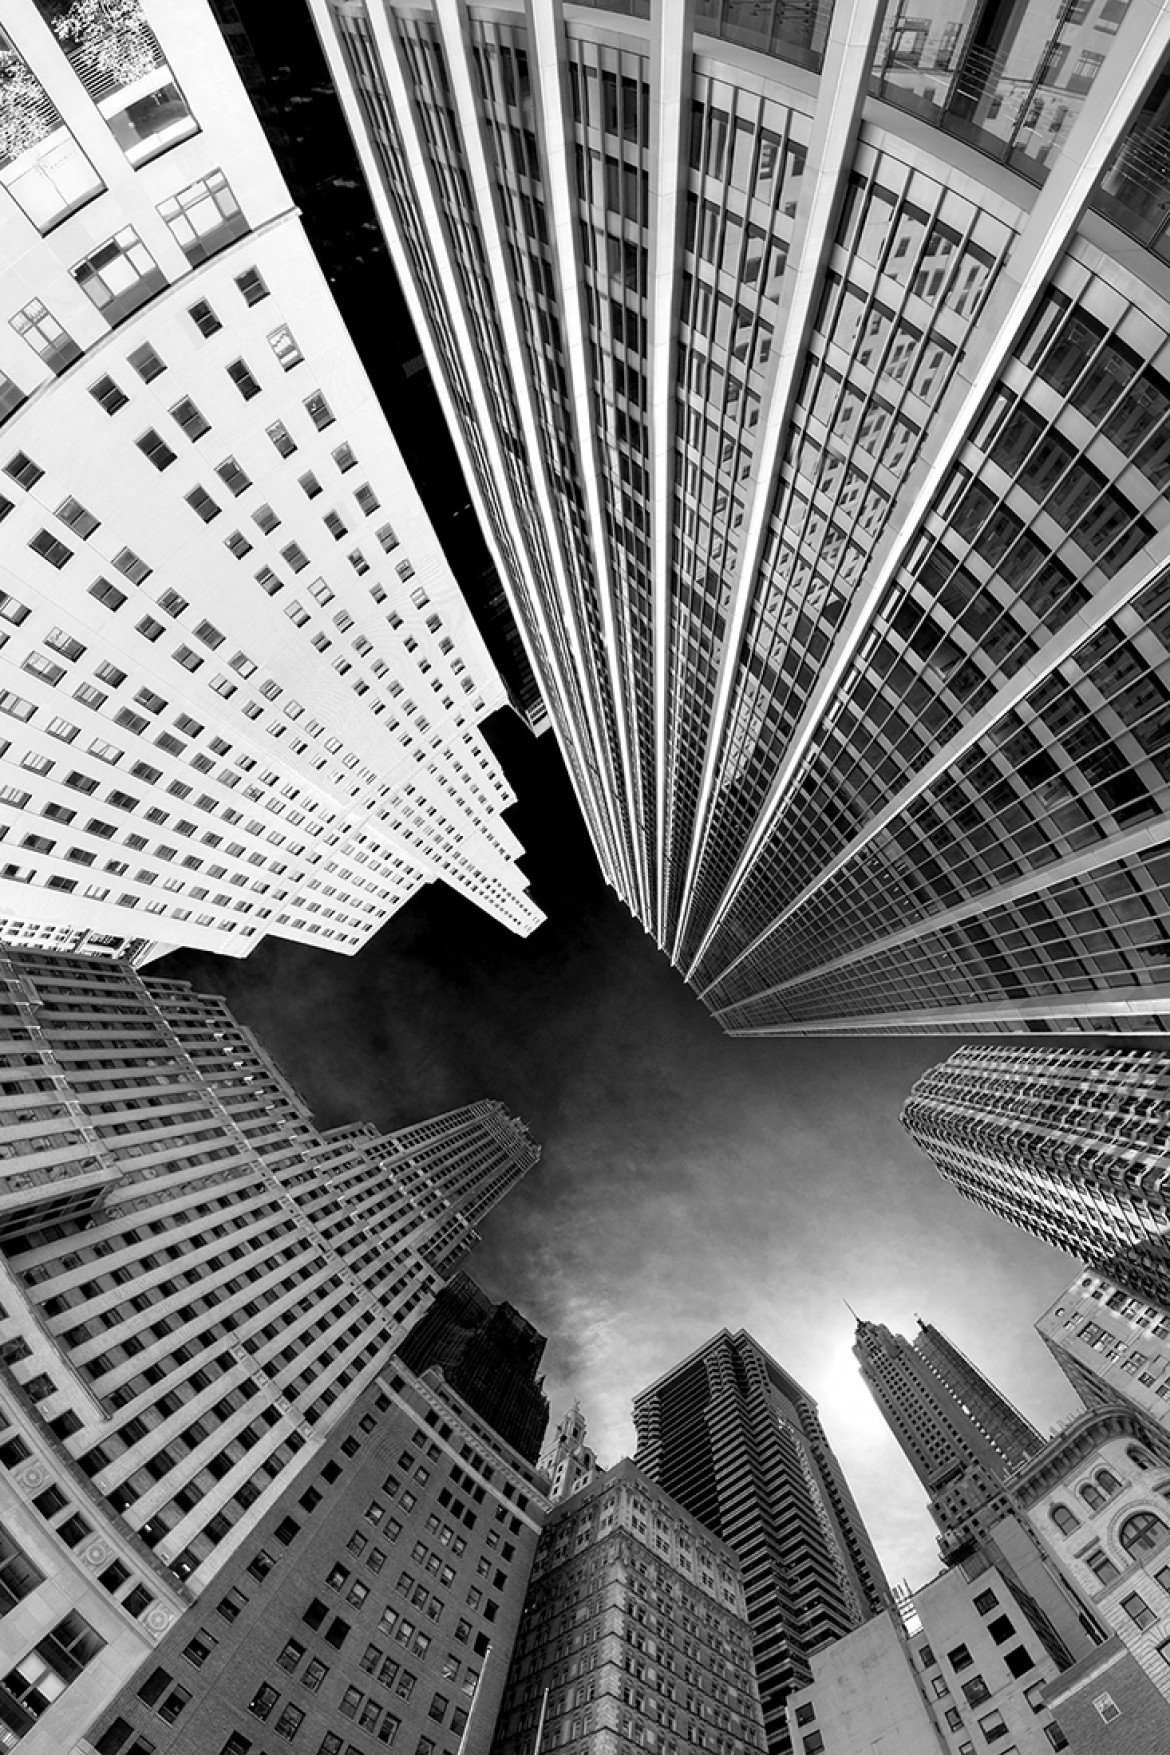 fot. Patrick Jacquet, "Urban vertigo", 3. miejsce w kategorii Architecture